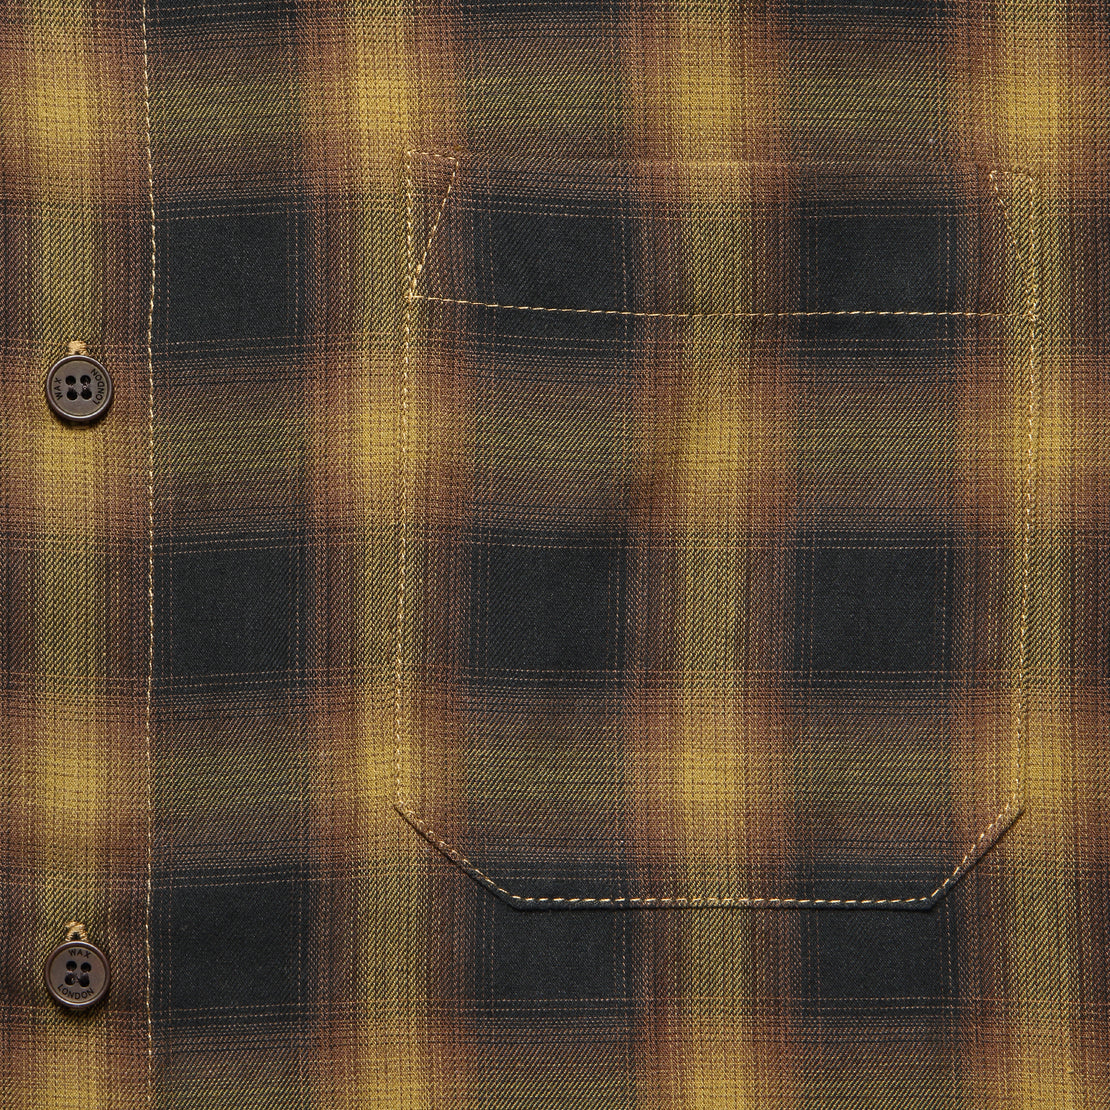 OZ Shirt - Brown Berkley Check - Wax London - STAG Provisions - Tops - L/S Woven - Plaid